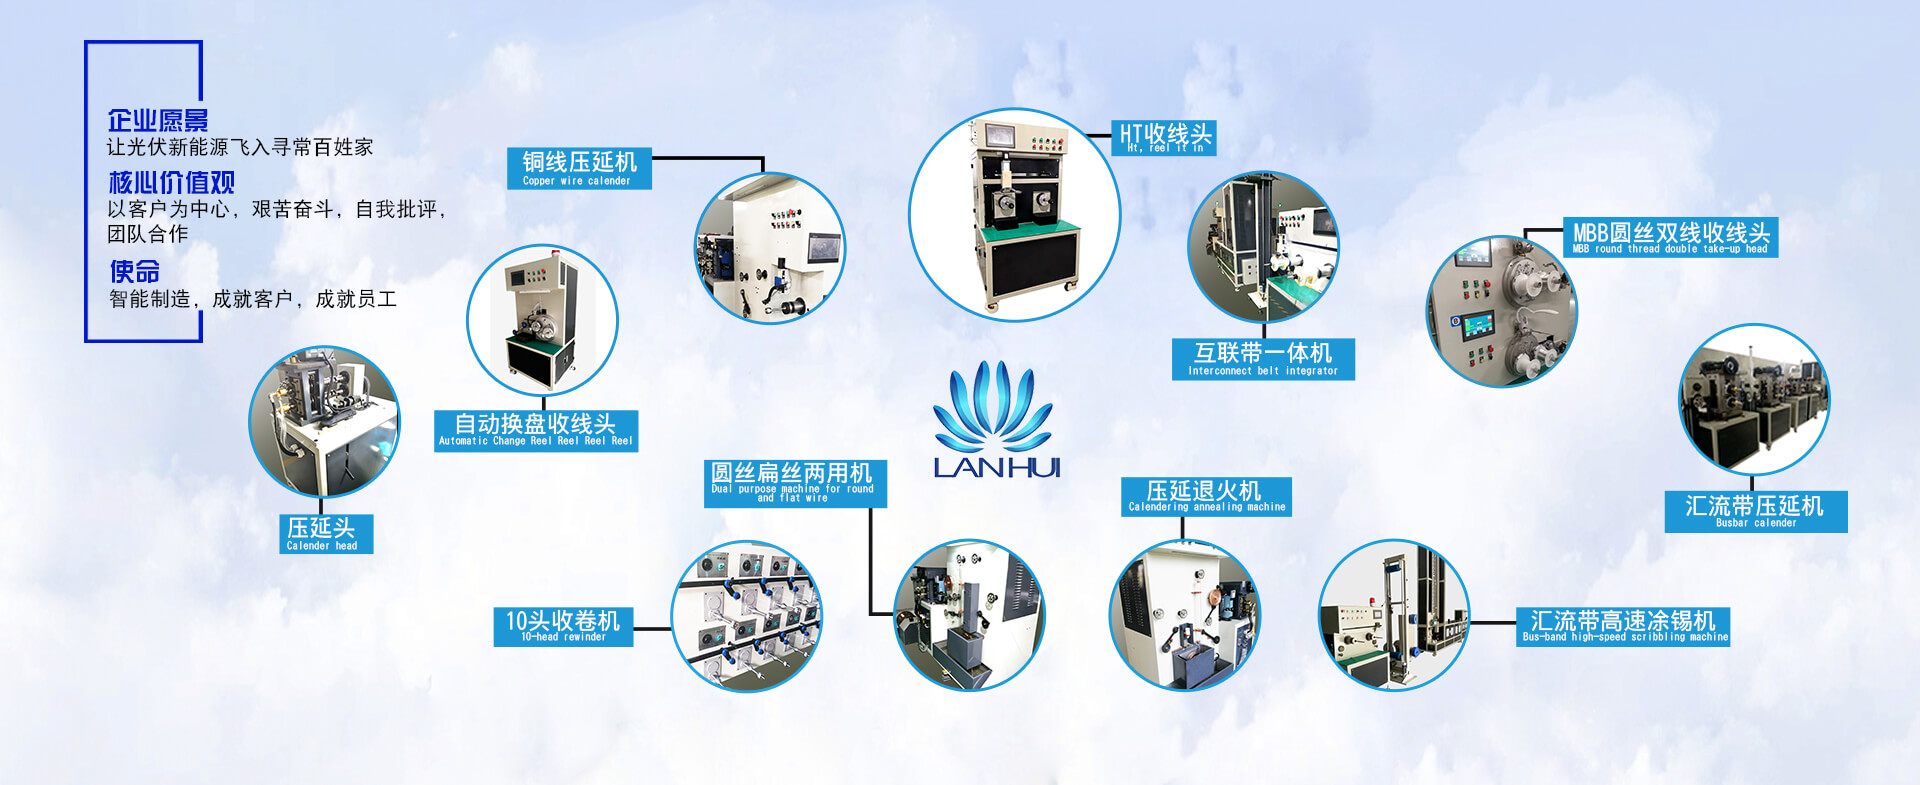 Jiangsu lanhui Intelligent Equipment Technology Co., Ltd.